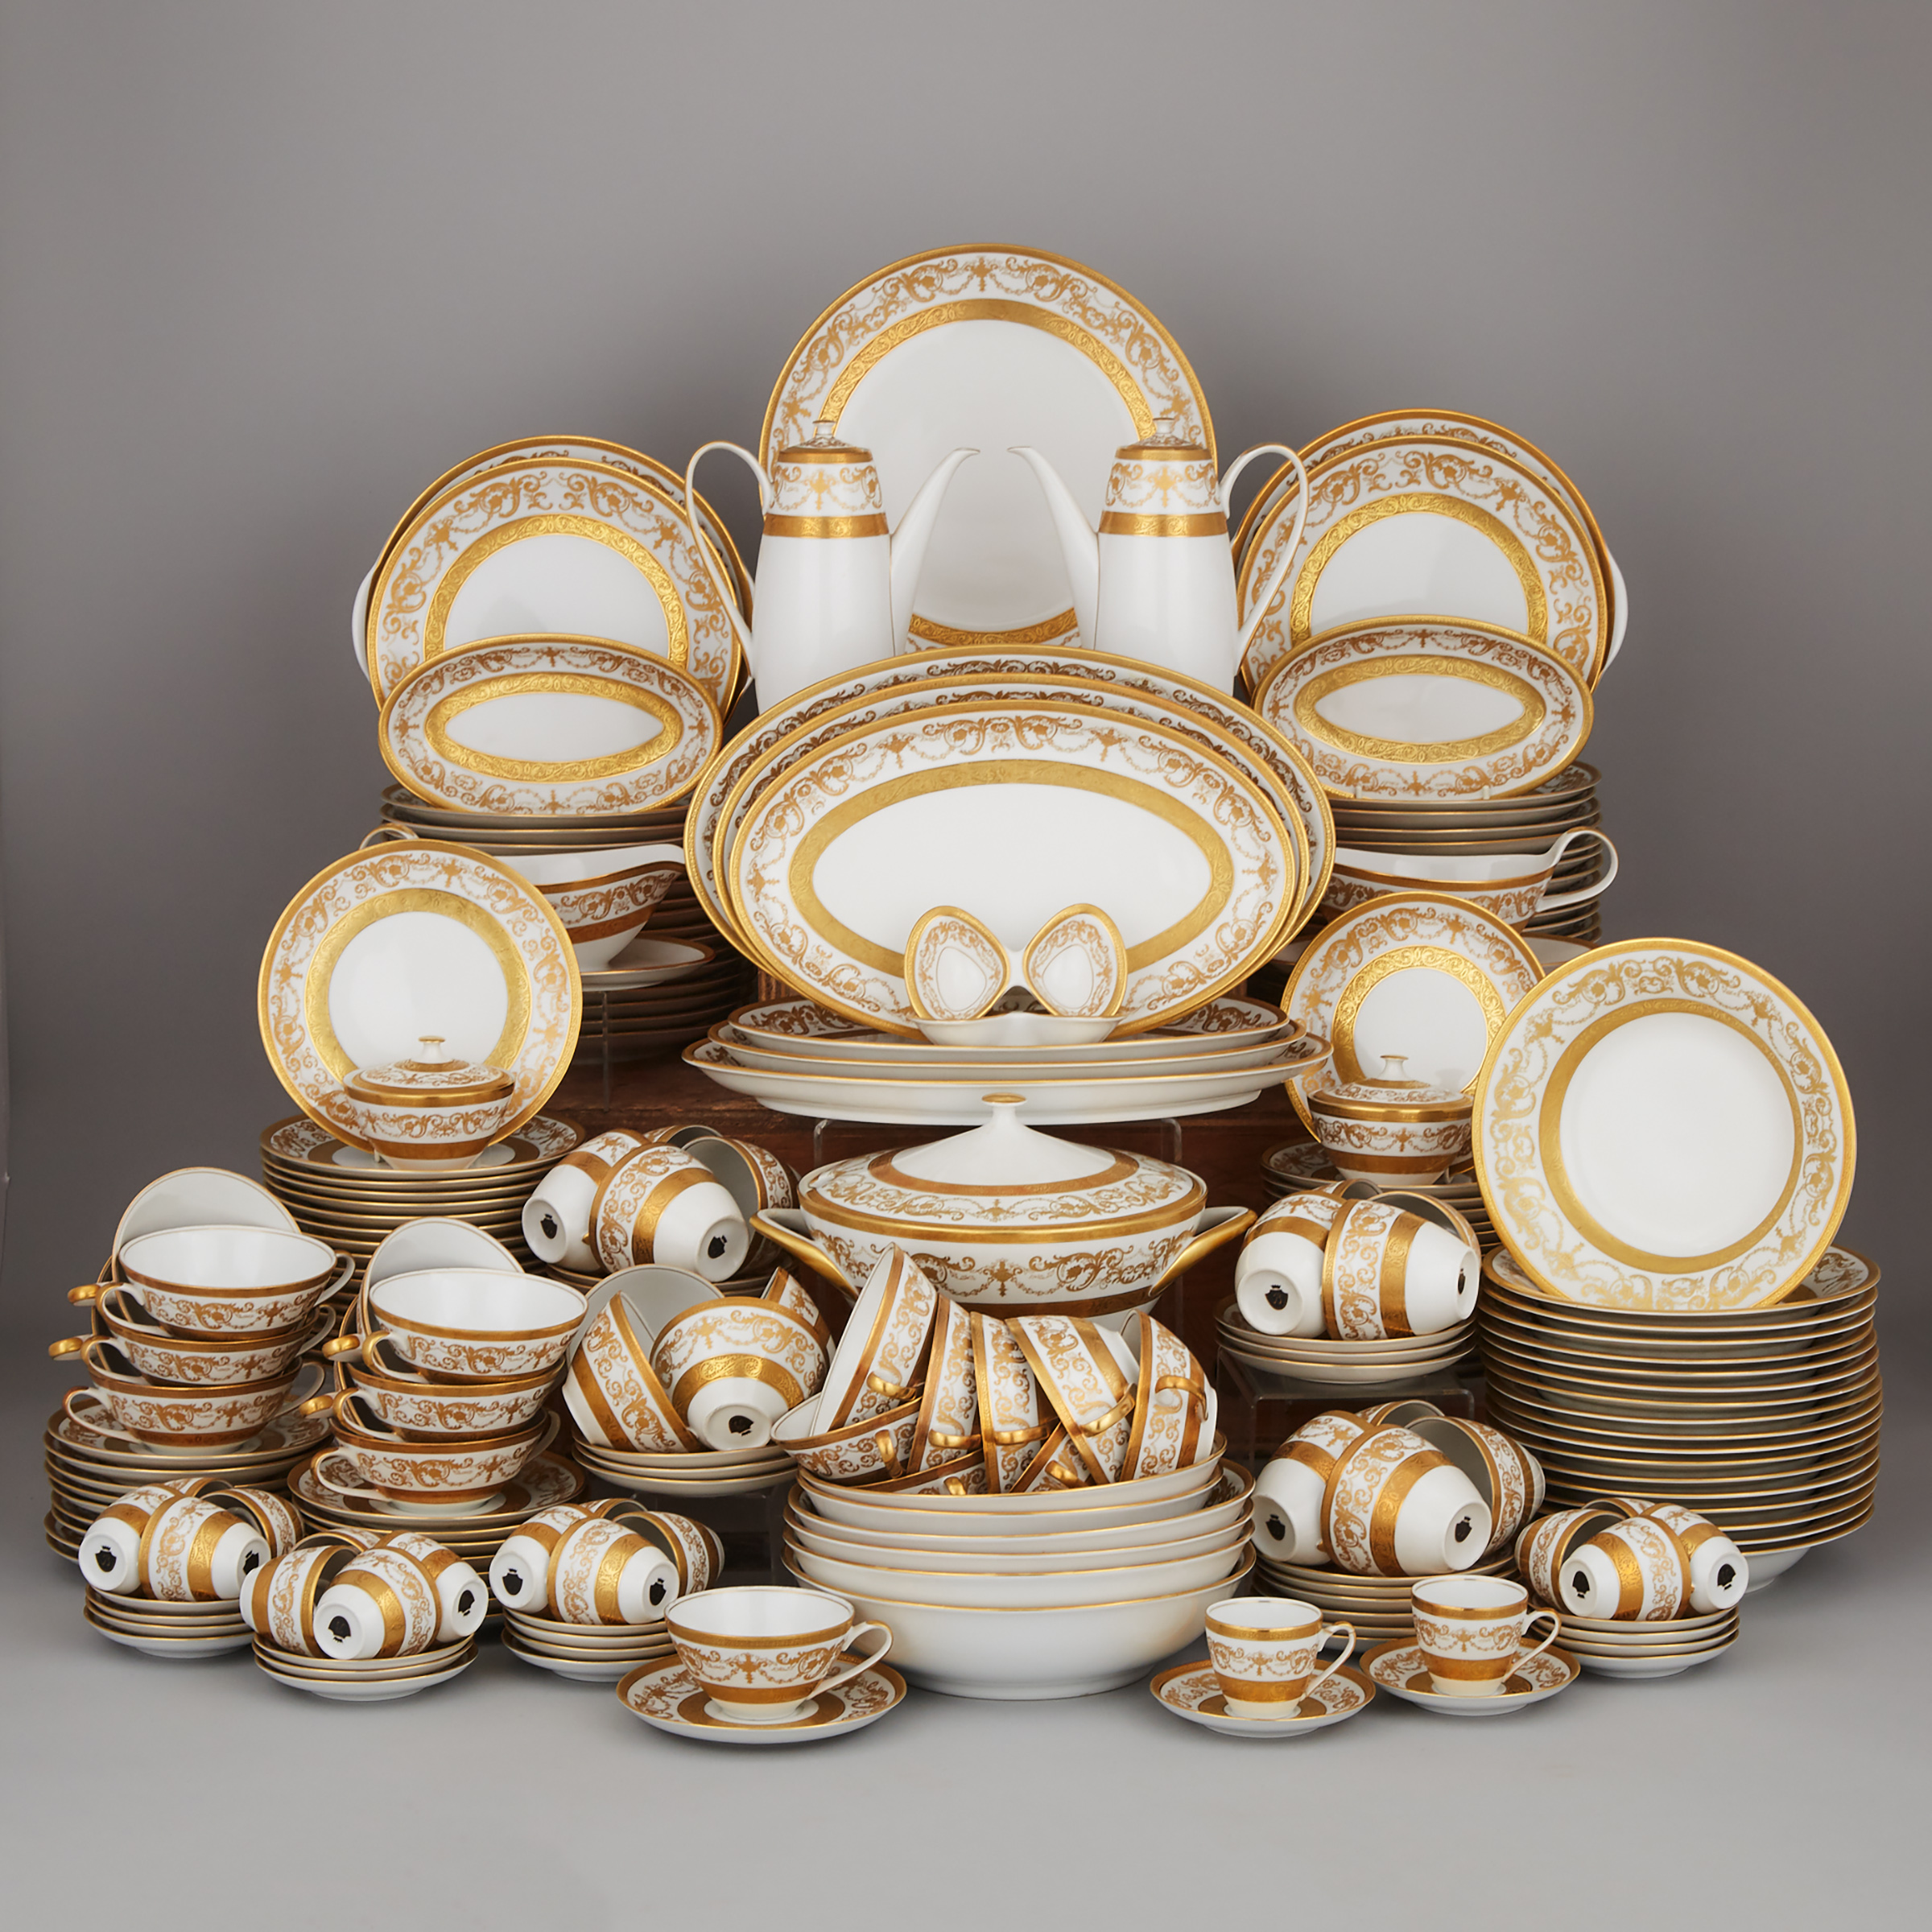 Bohemia Porcelaine De Luxe Gilt Decorated Service, 20th century